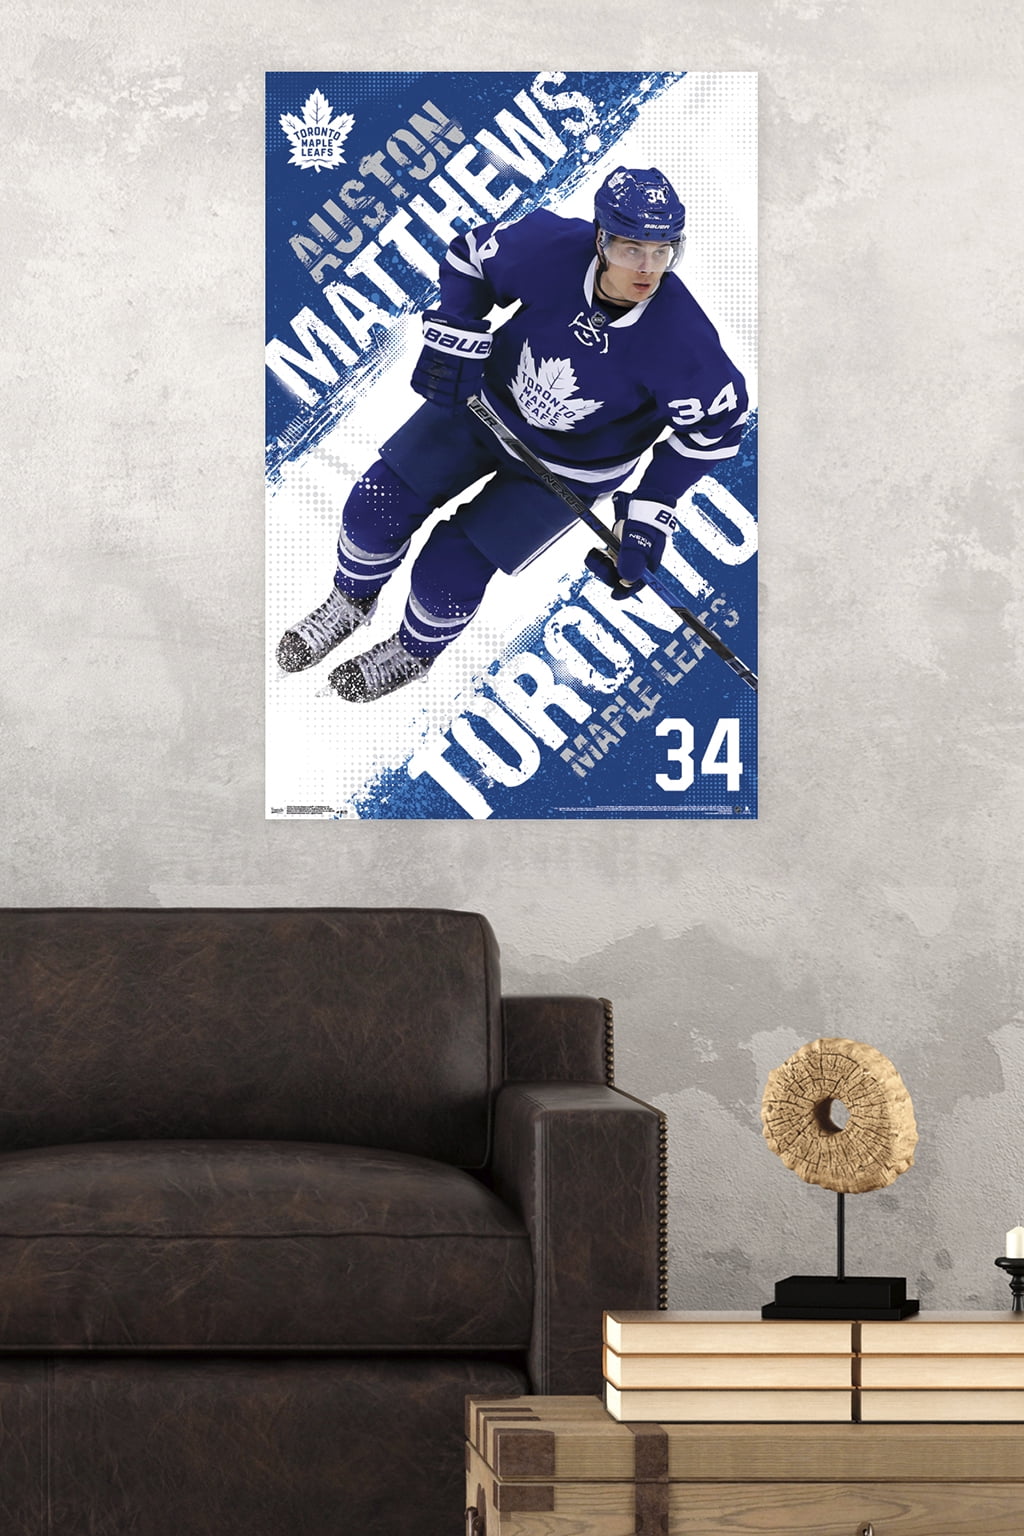 Trends International NHL Toronto Maple Leafs - Austin Matthews 16 Wall  Poster, 22.375 x 34, Premium Unframed Version